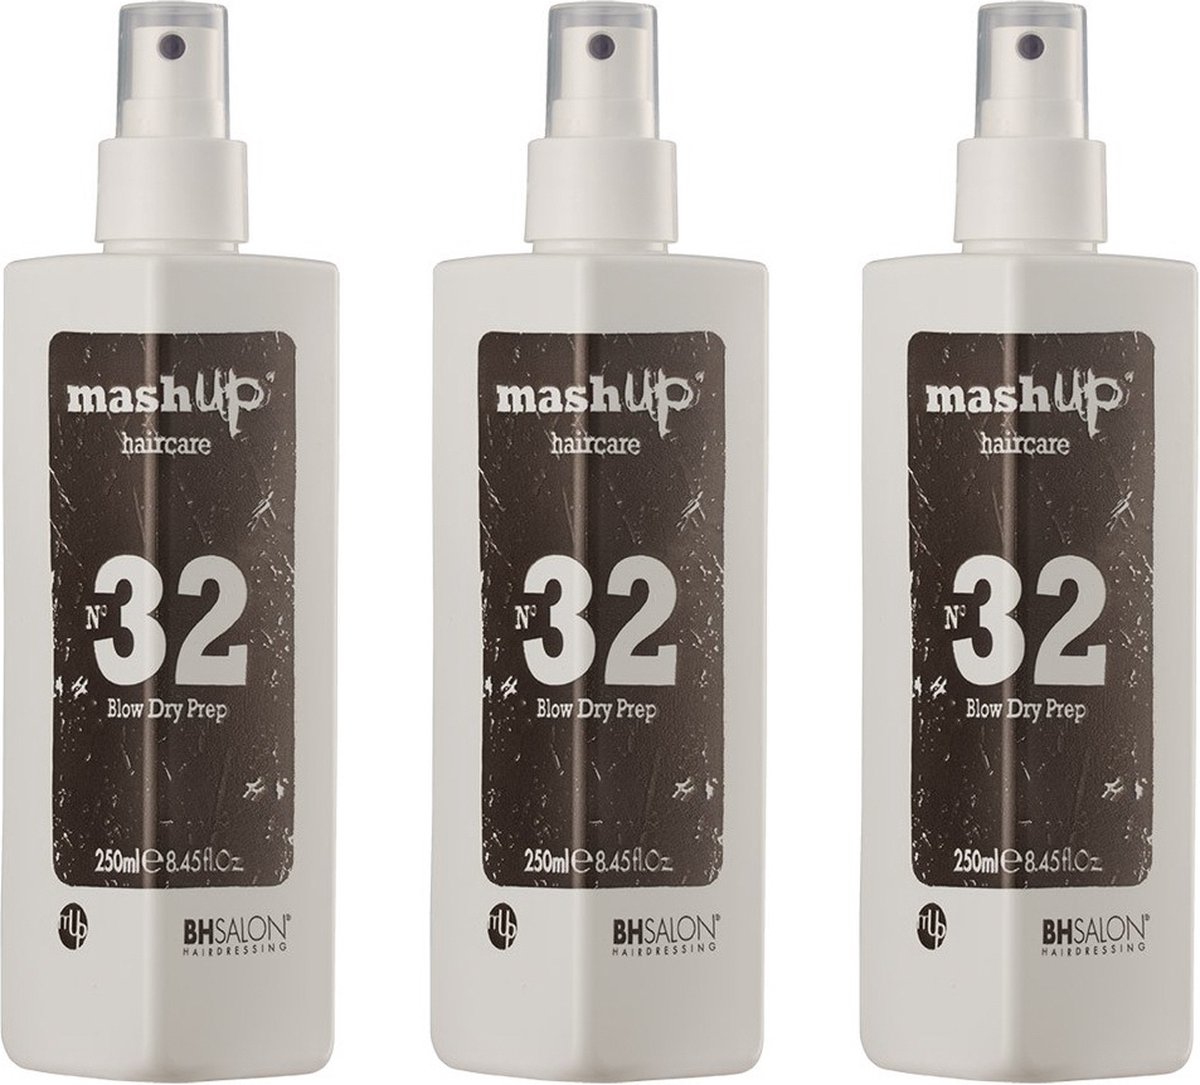 mashUp haircare N° 32 Blow Dry Pep 250ml - 3 stuks